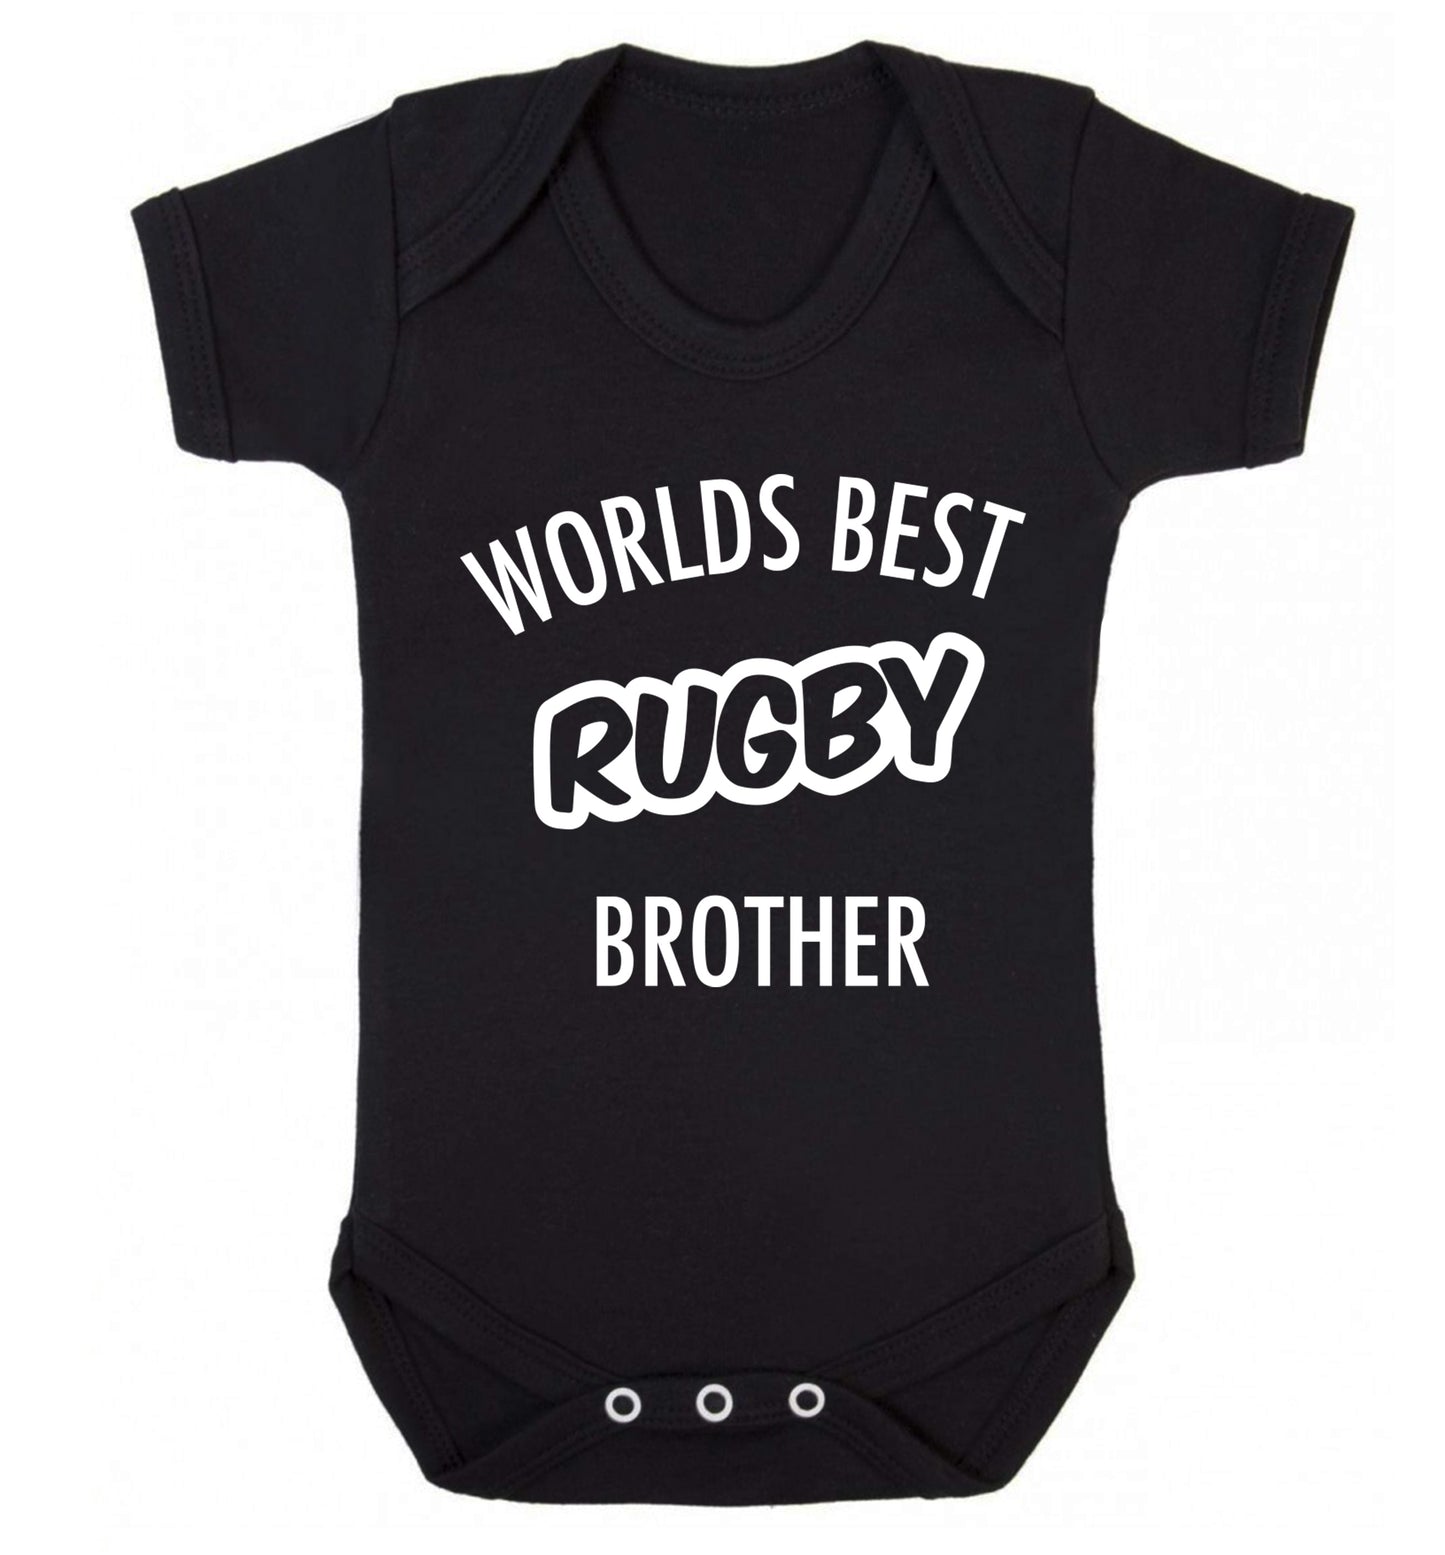 Worlds best rugby brother Baby Vest black 18-24 months